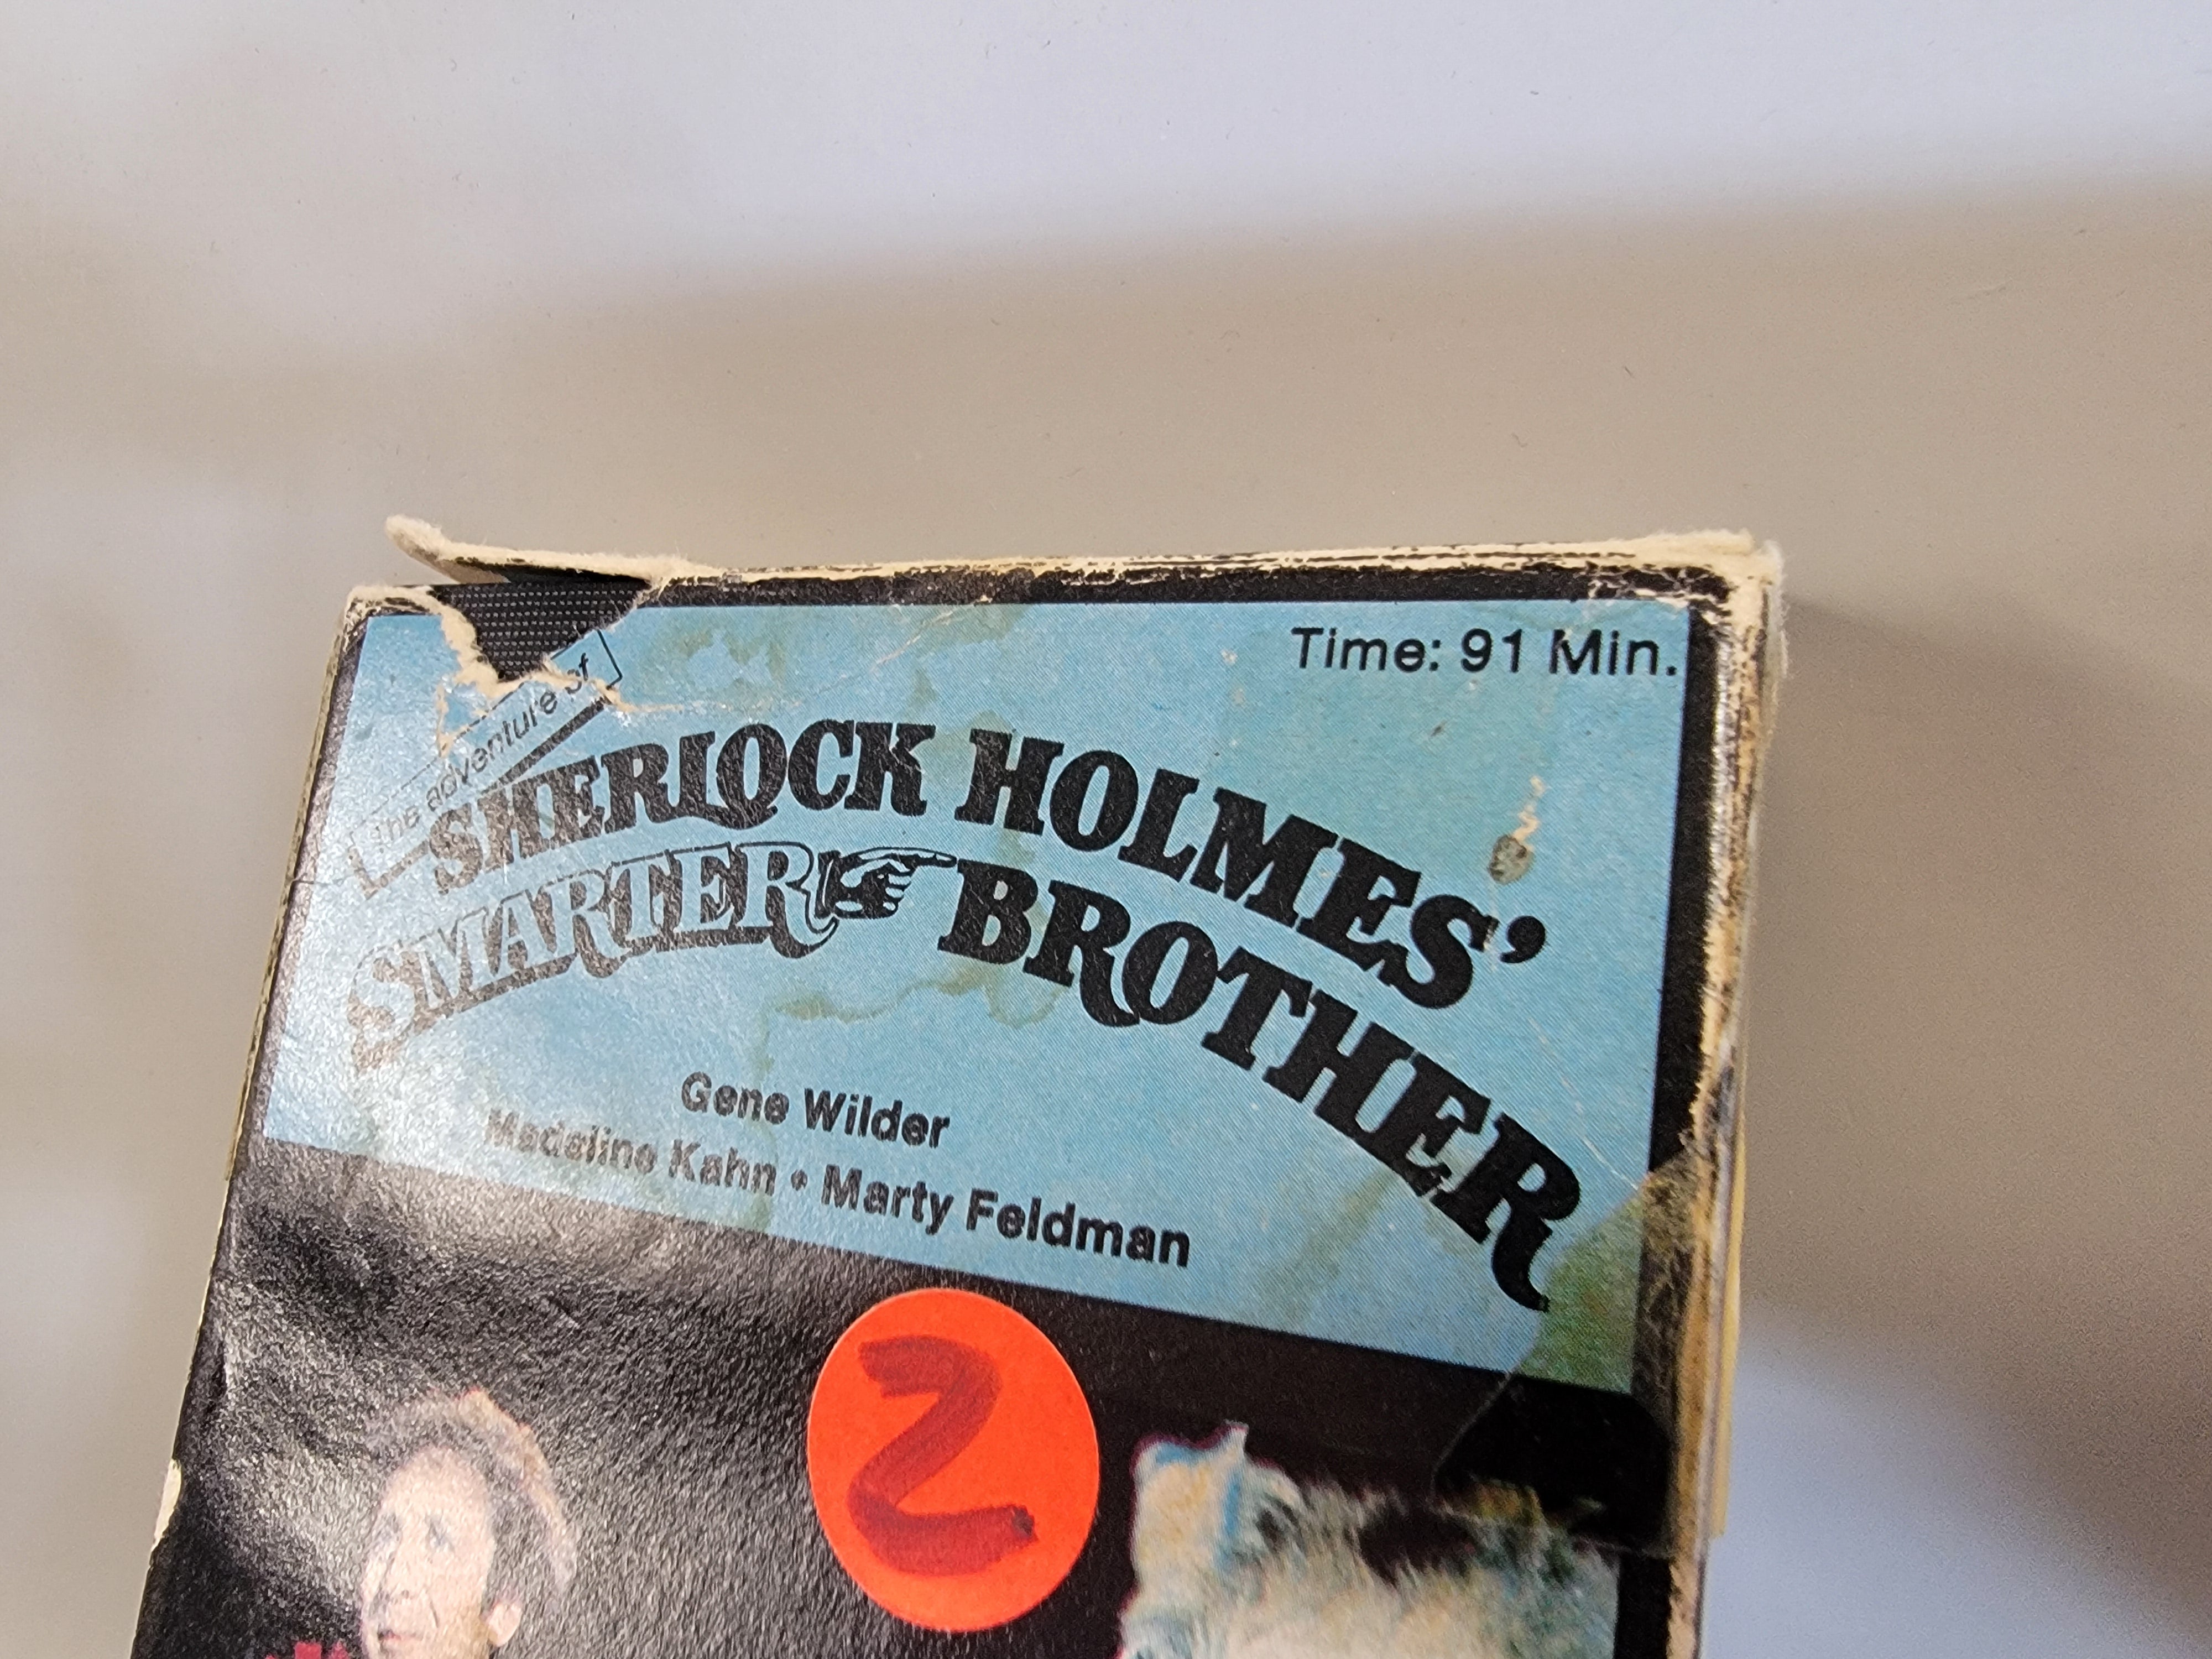 SHERLOCK HOLMES' SMARTER BROTHER VHS [USED]